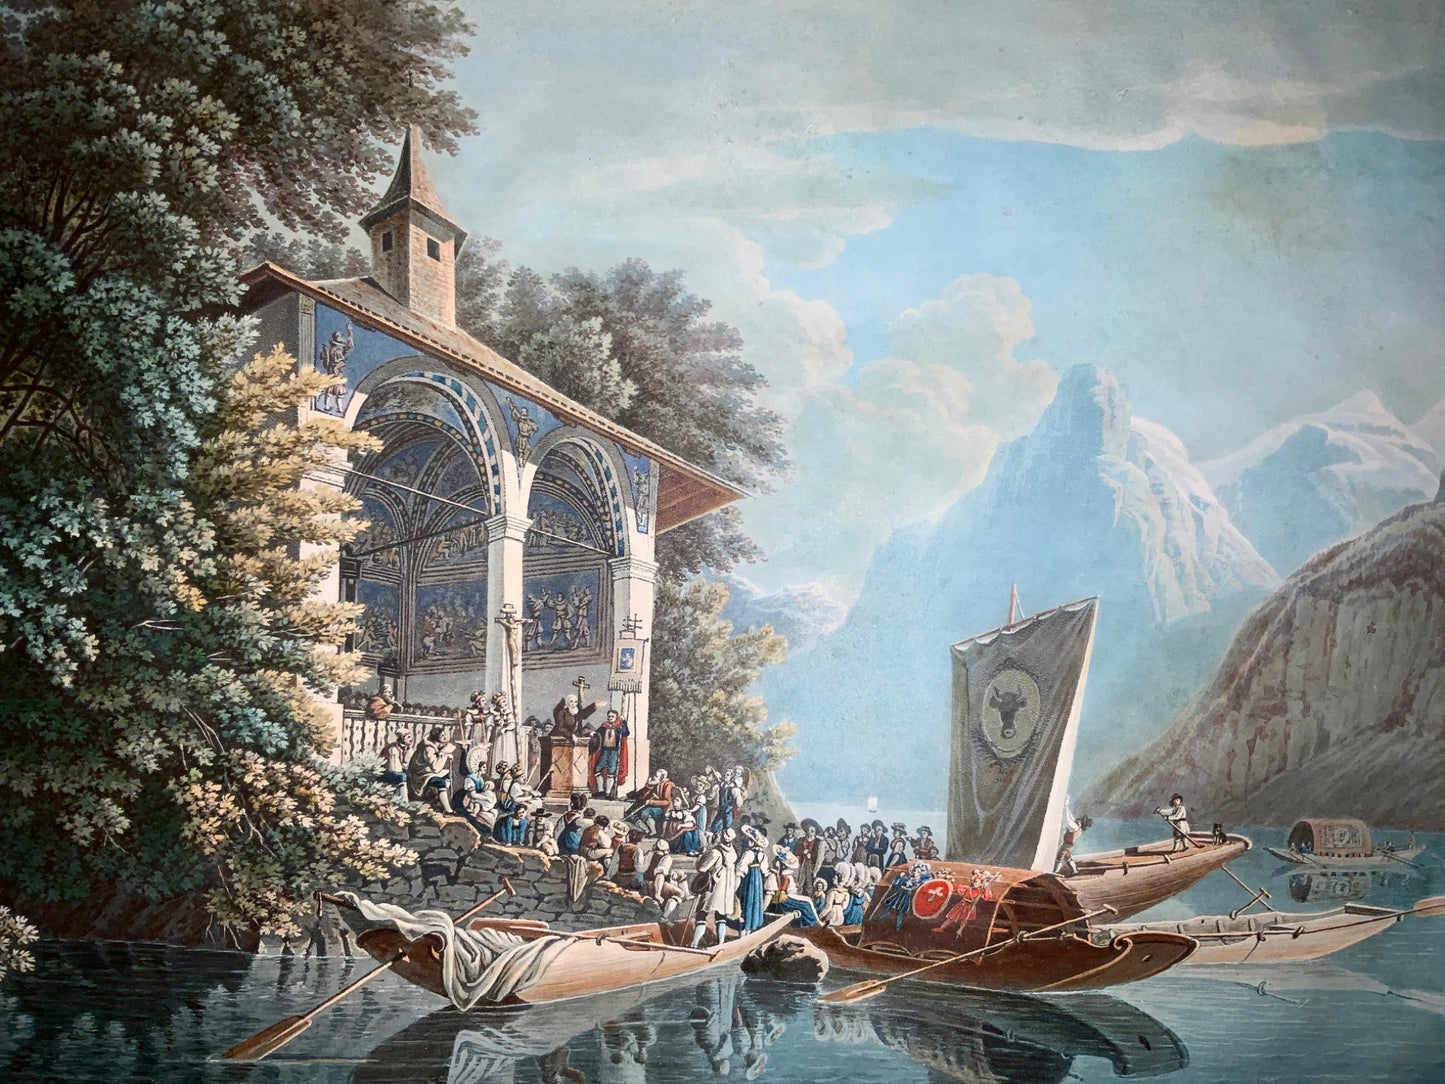 1830 G. Lory; Hurlimann - Tell’s Chapel Switzerland - Large hand col. aquatint - ‘Klein Meister’ Master Print